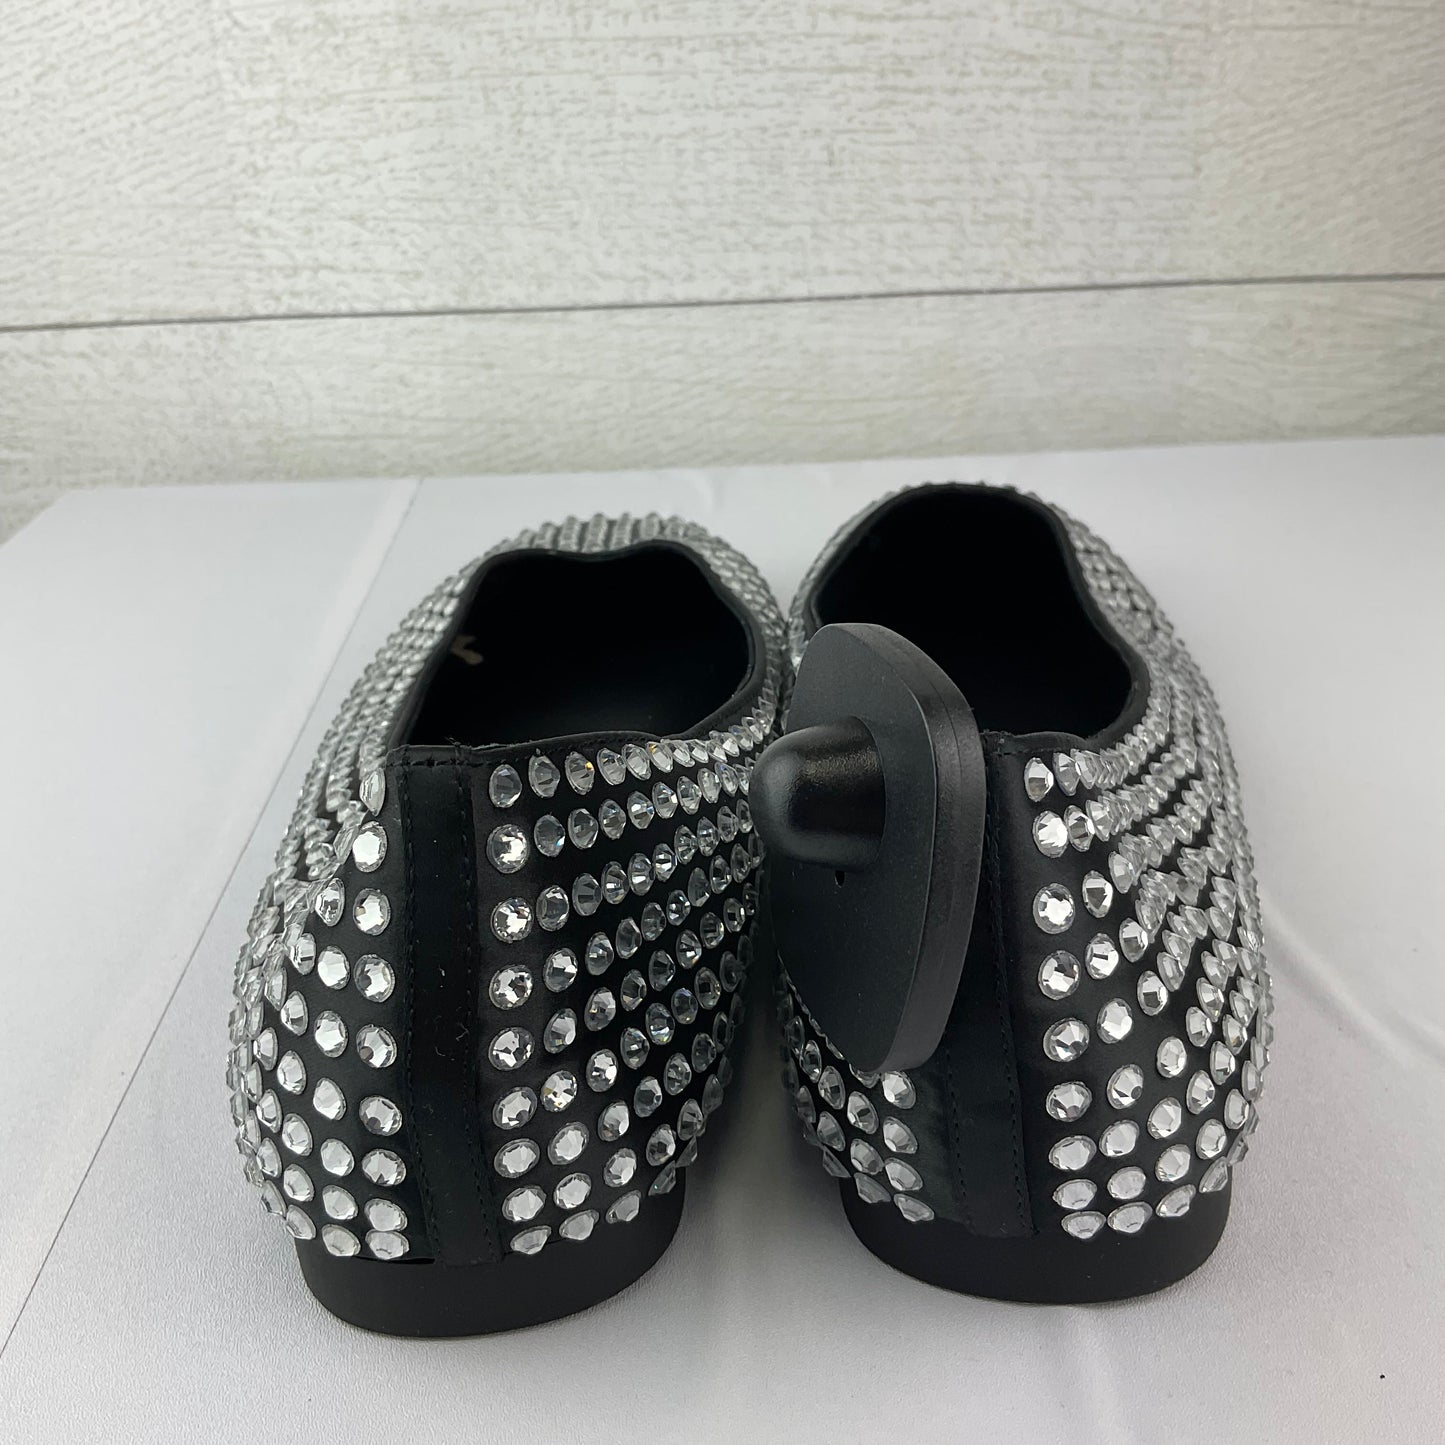 Black & Silver Shoes Flats Steve Madden, Size 10